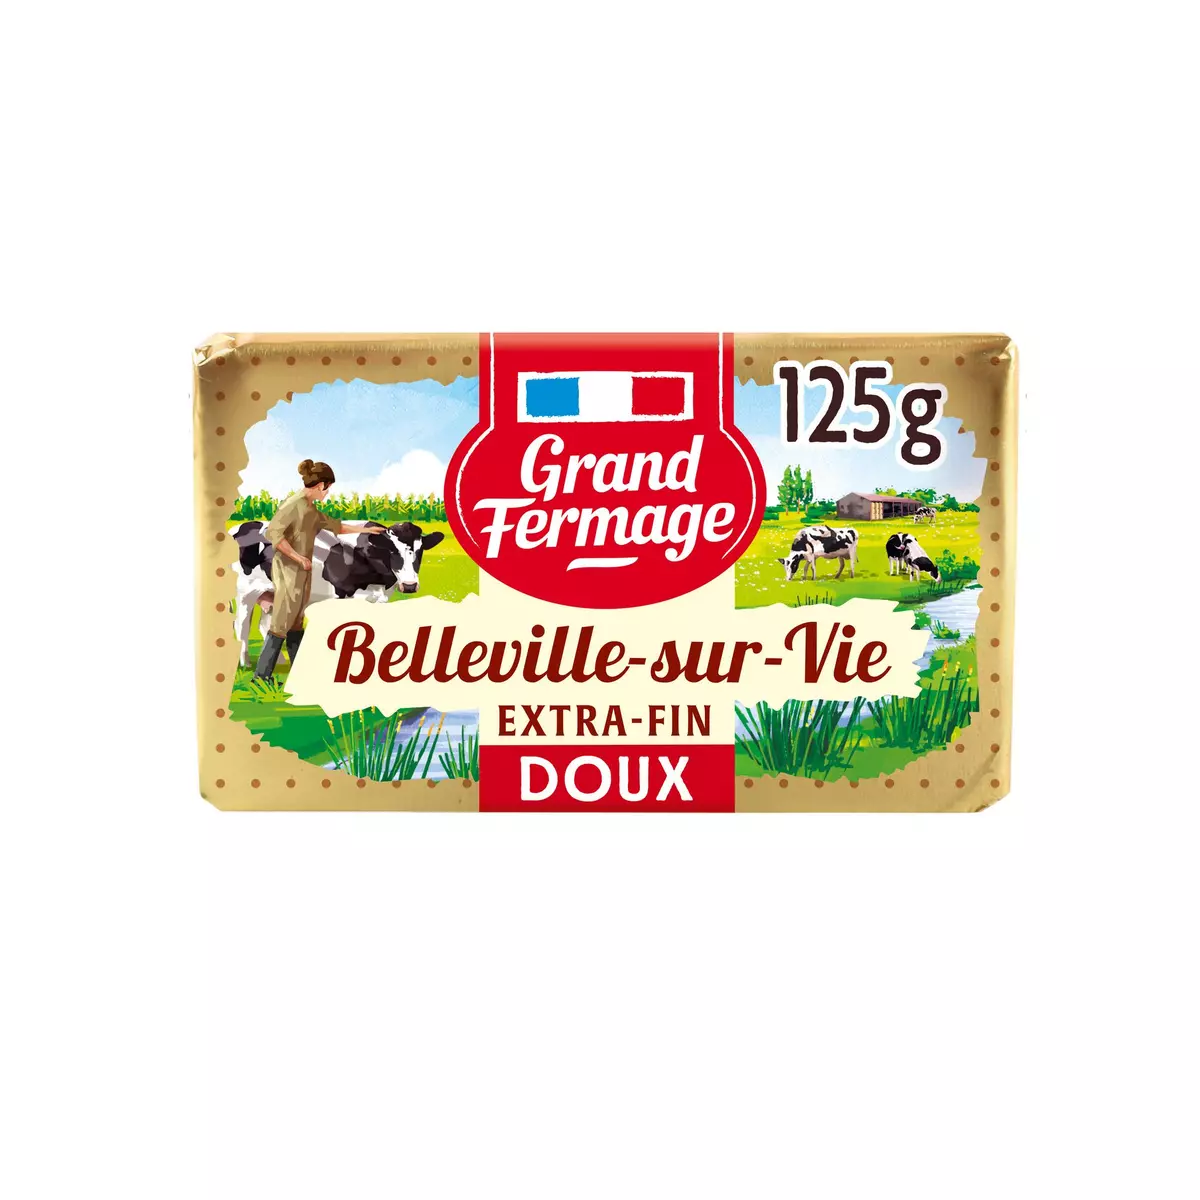 GRAND FERMAGE Beurre extra-fin doux AOP Charentes Poitou 125g